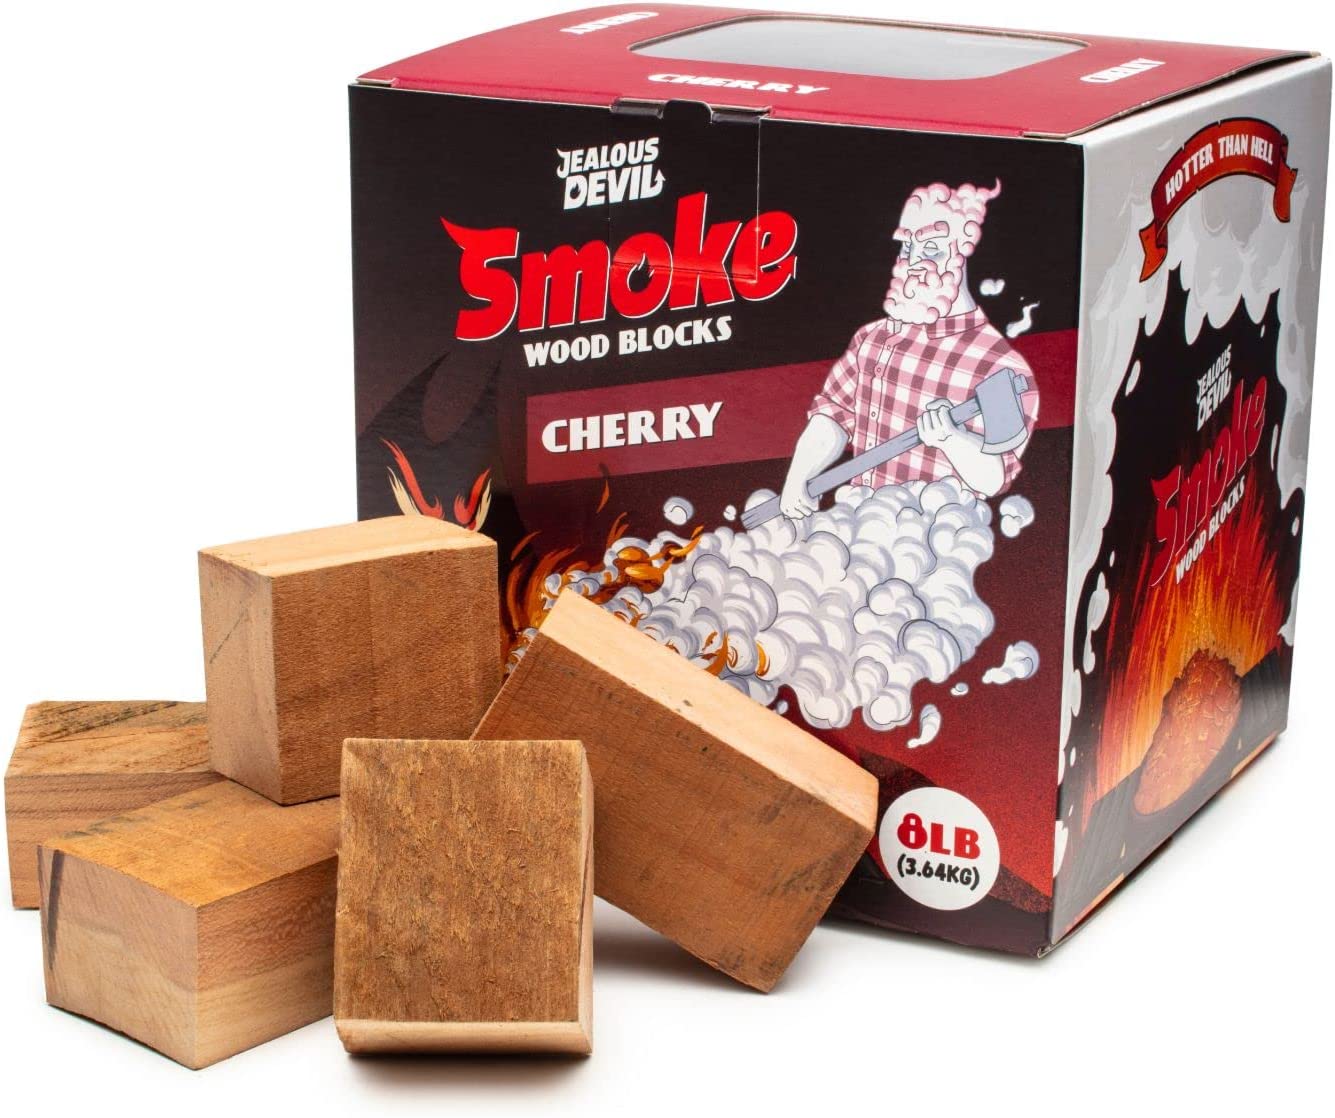 Jealous Devil Smoke Wood Blocks Cherry with Box